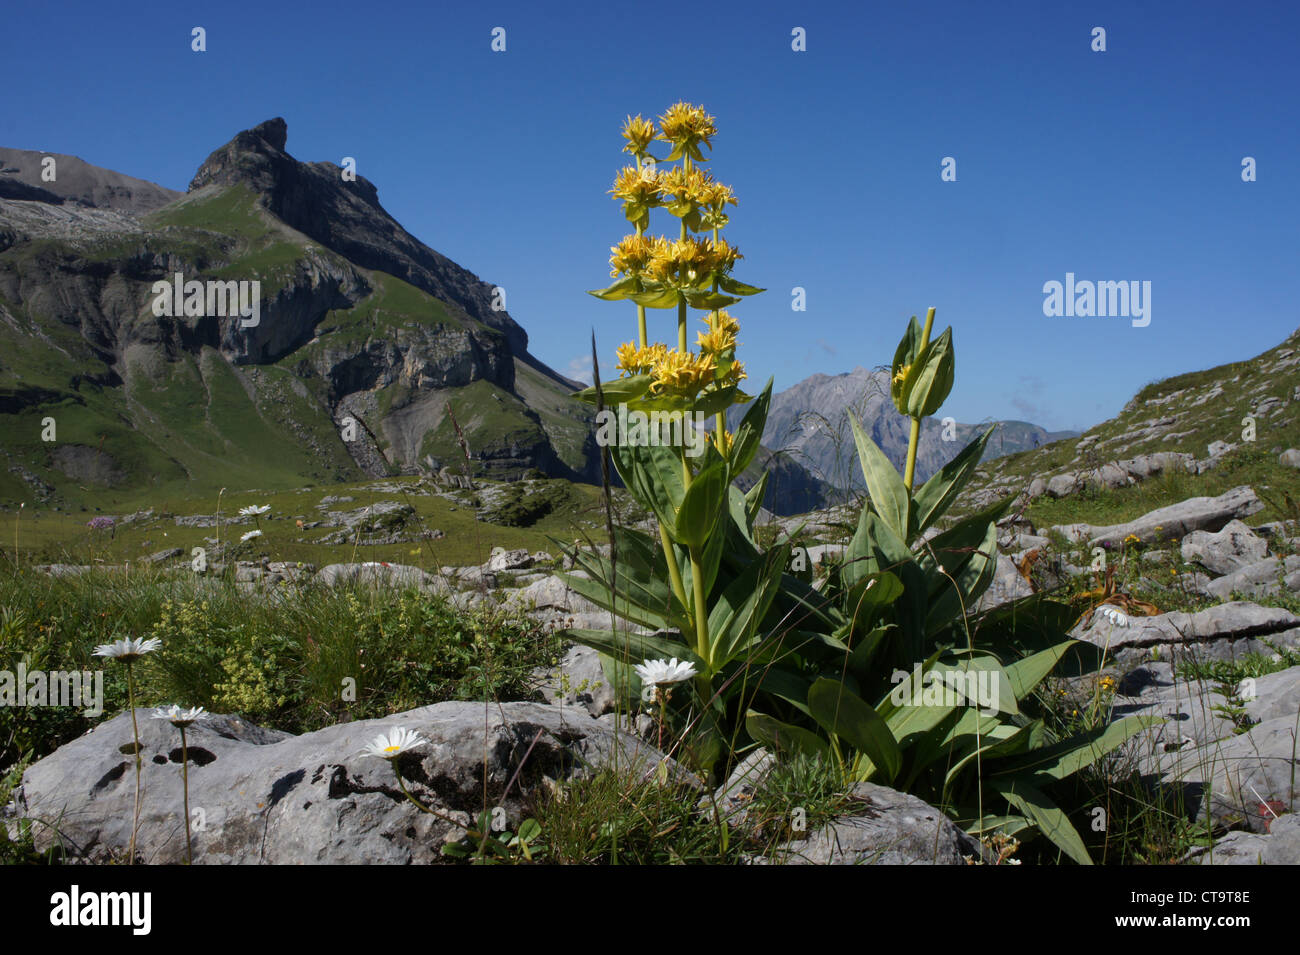 Gentiane giallo, Alp Hohkien, Kiental, alpi Bernesi, Svizzera Foto Stock